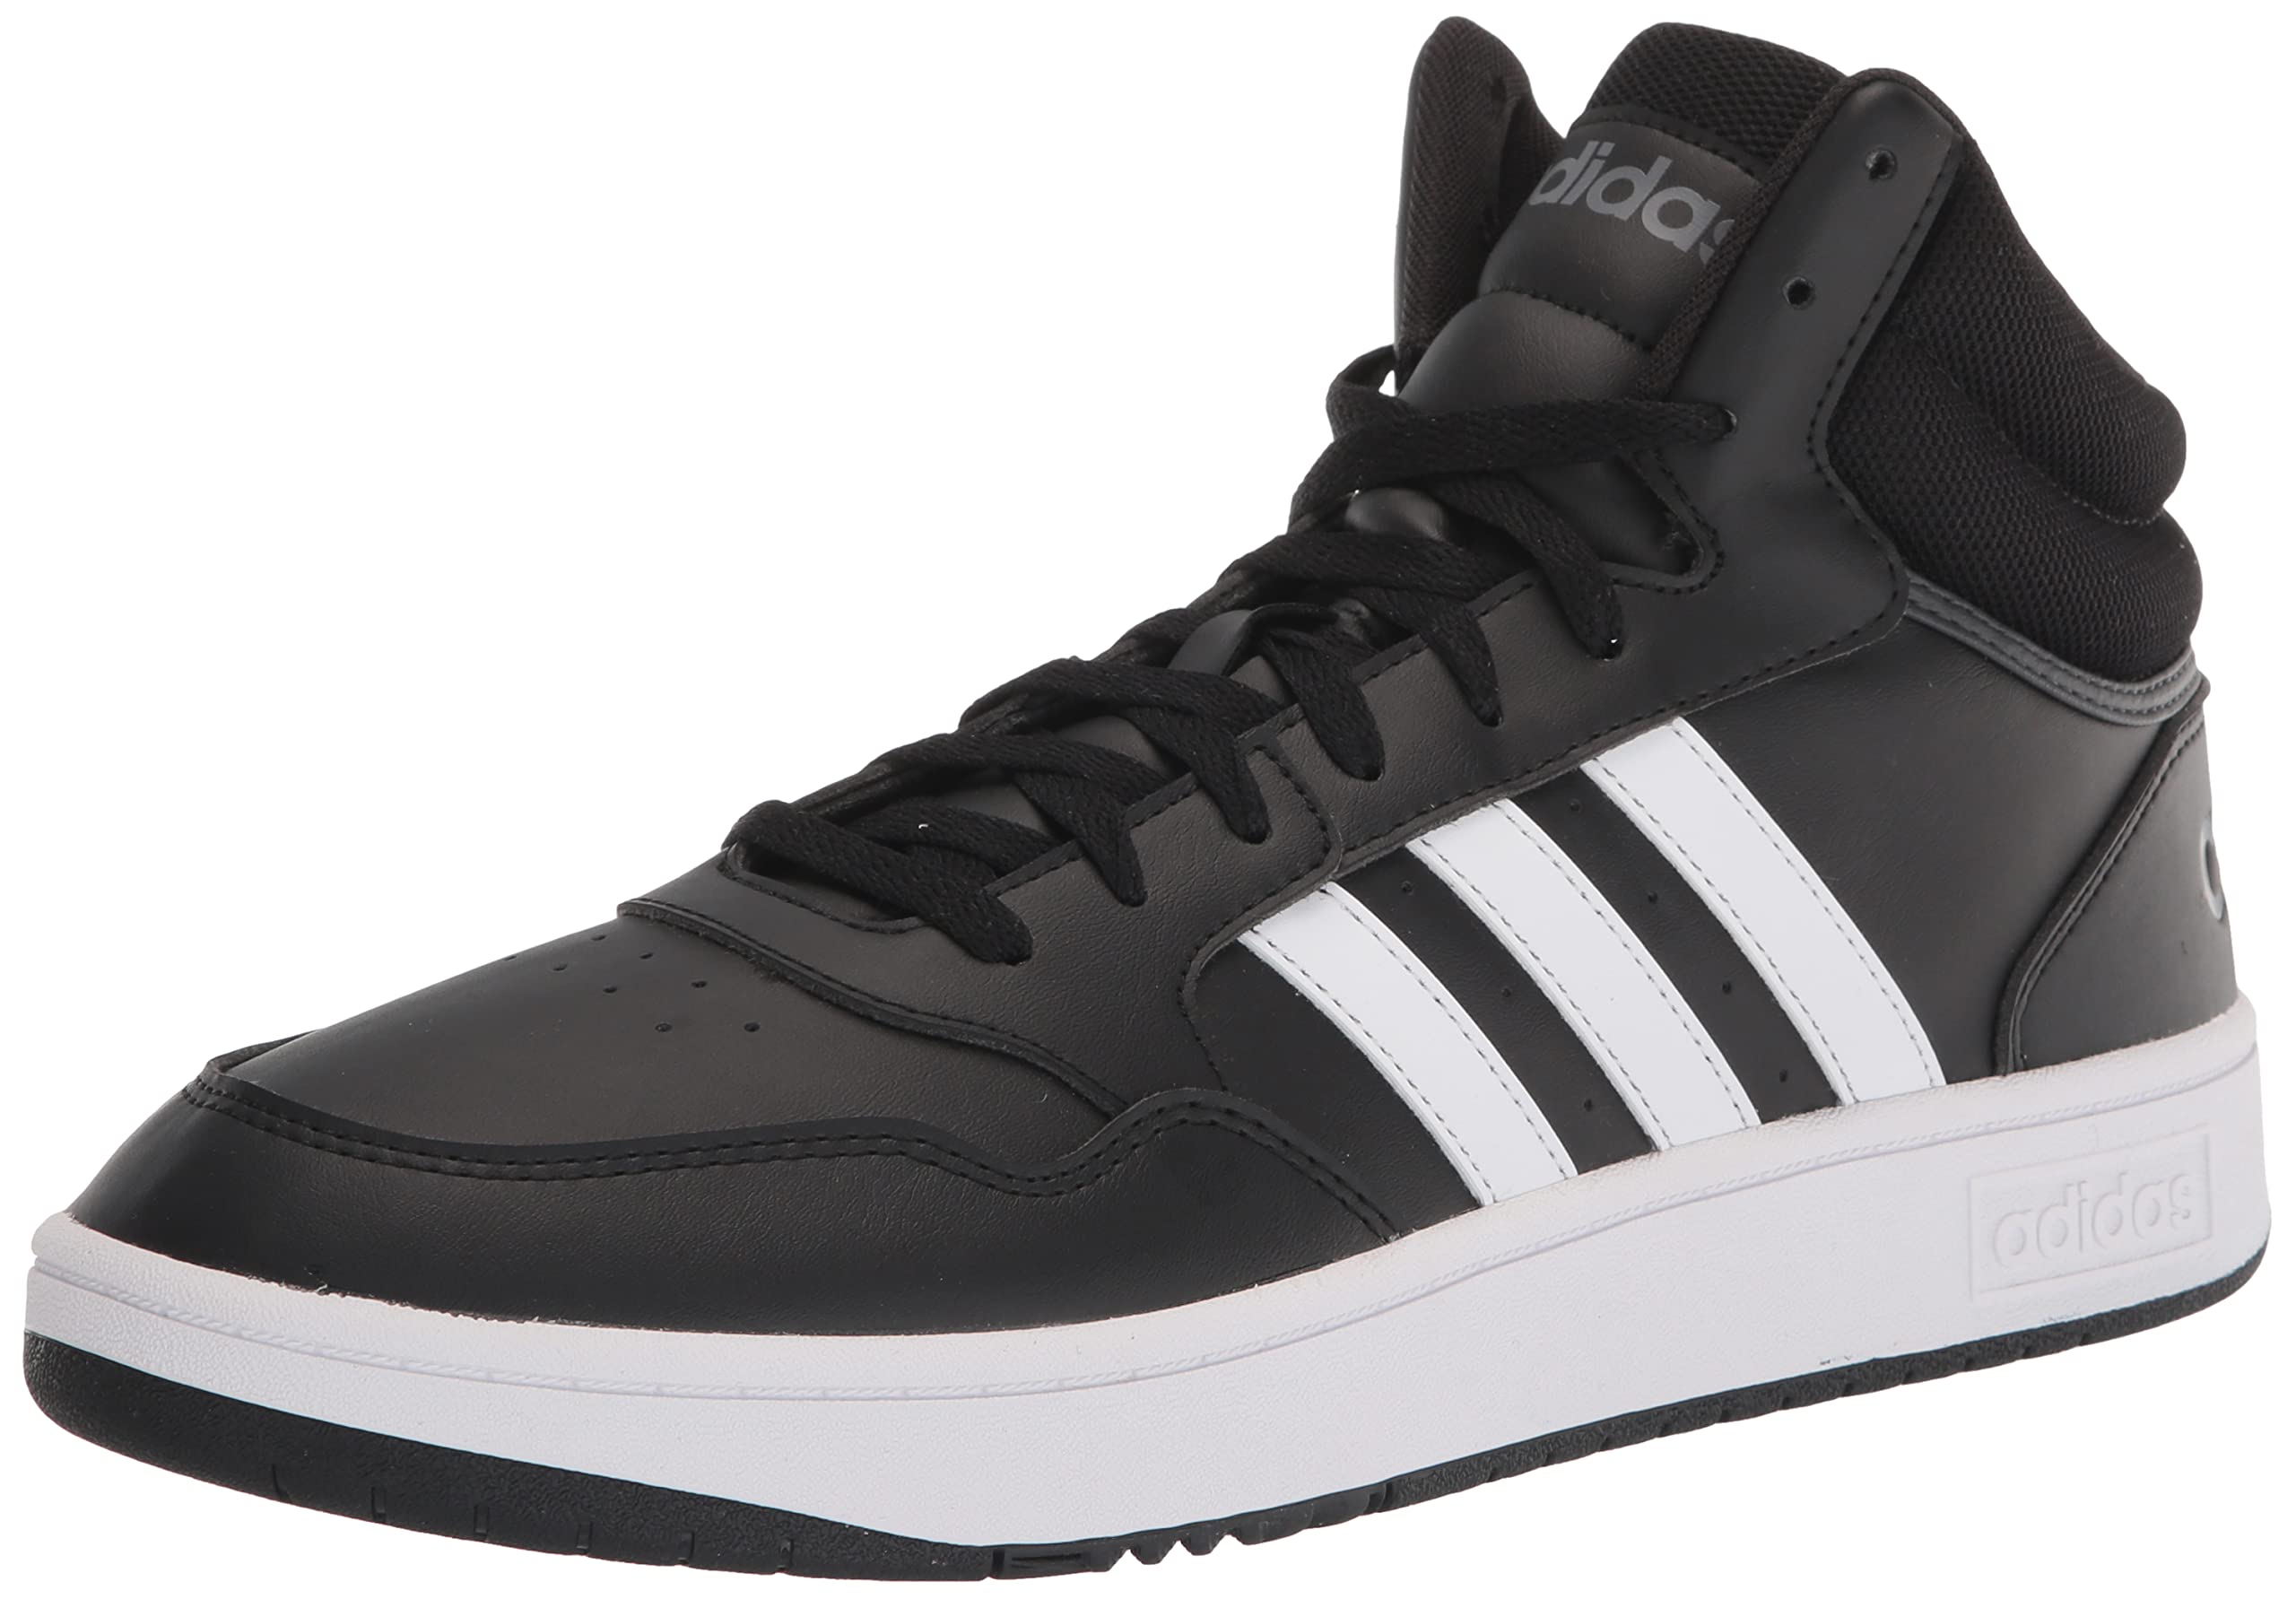 adidas Men's Hoops 3.0 Mid Basketball Shoe, Black/White/Grey, 10.5